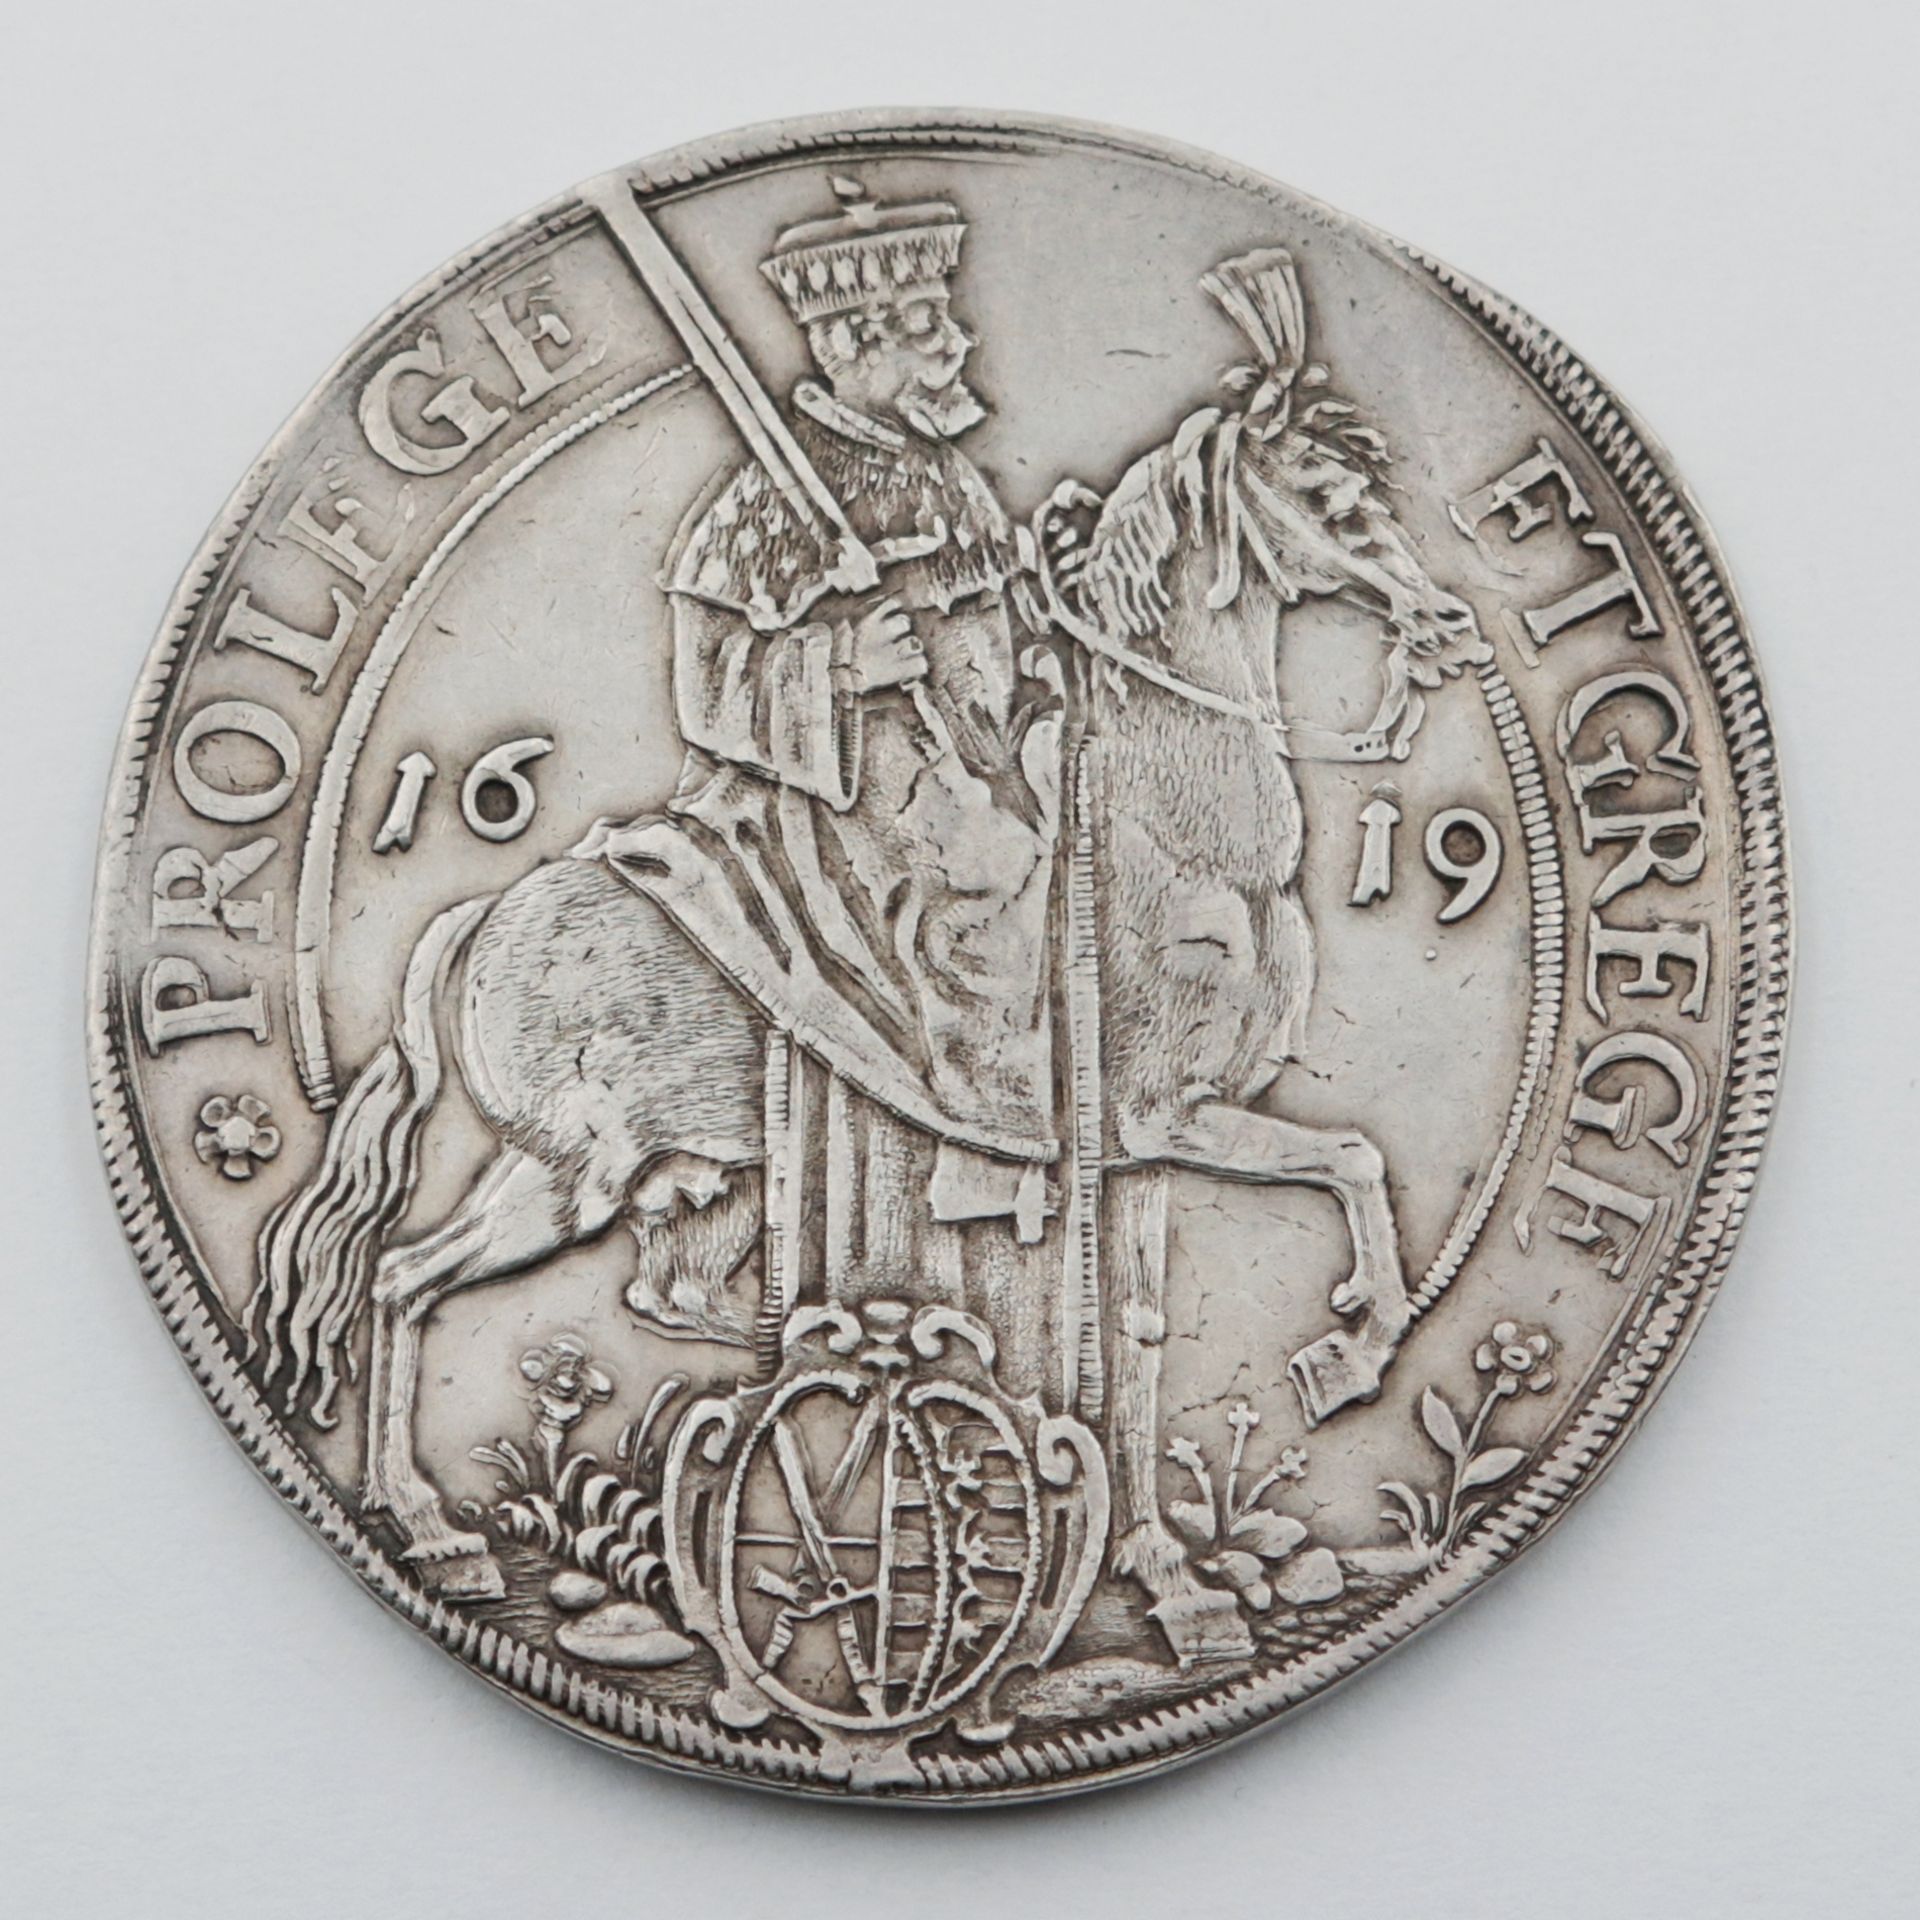 Sachsen Silbermünze, Vikariatstaler, 1619, Prolege Et Grege, Johann Georg I, Kurfürs